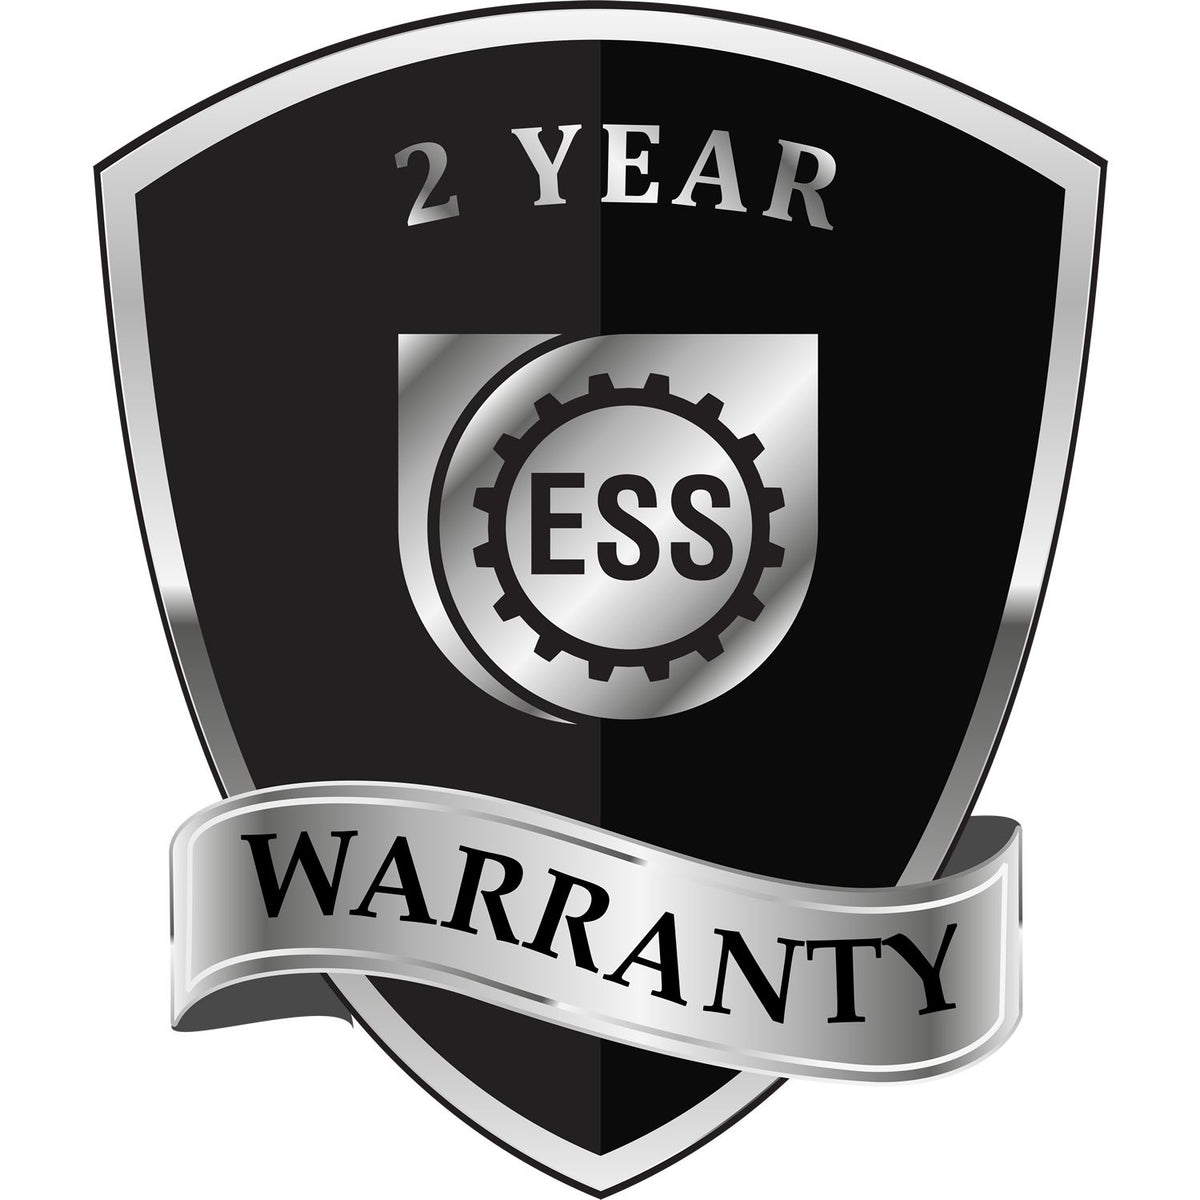 A badge or emblem showing a warranty icon for the Handheld Mississippi Land Surveyor Seal